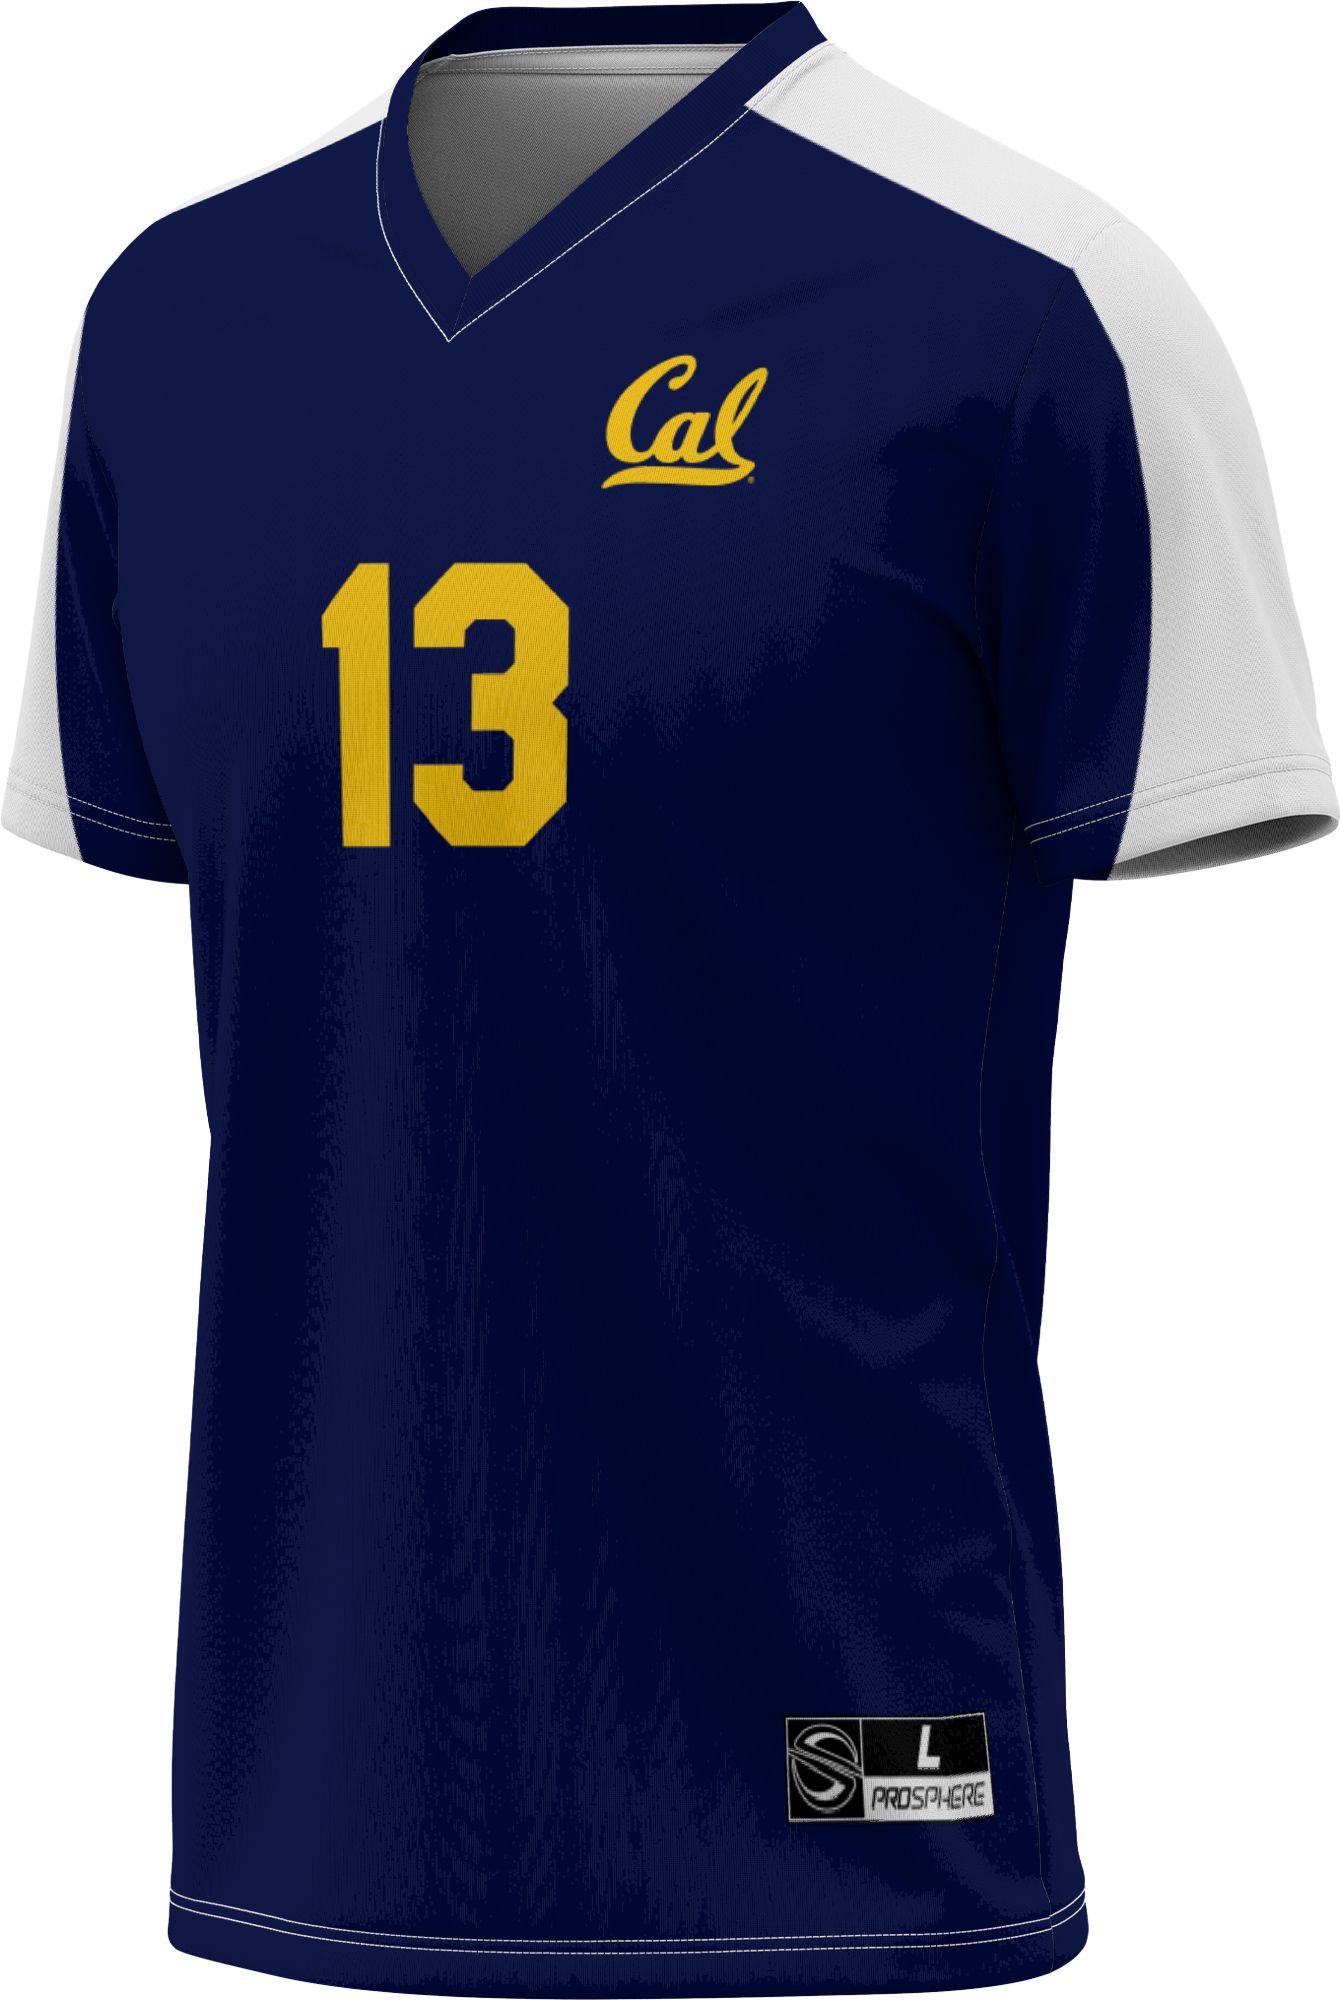 Prosphere Men's Cal Golden Bears #13 Blue Alex Morgan Replica Soccer Jersey